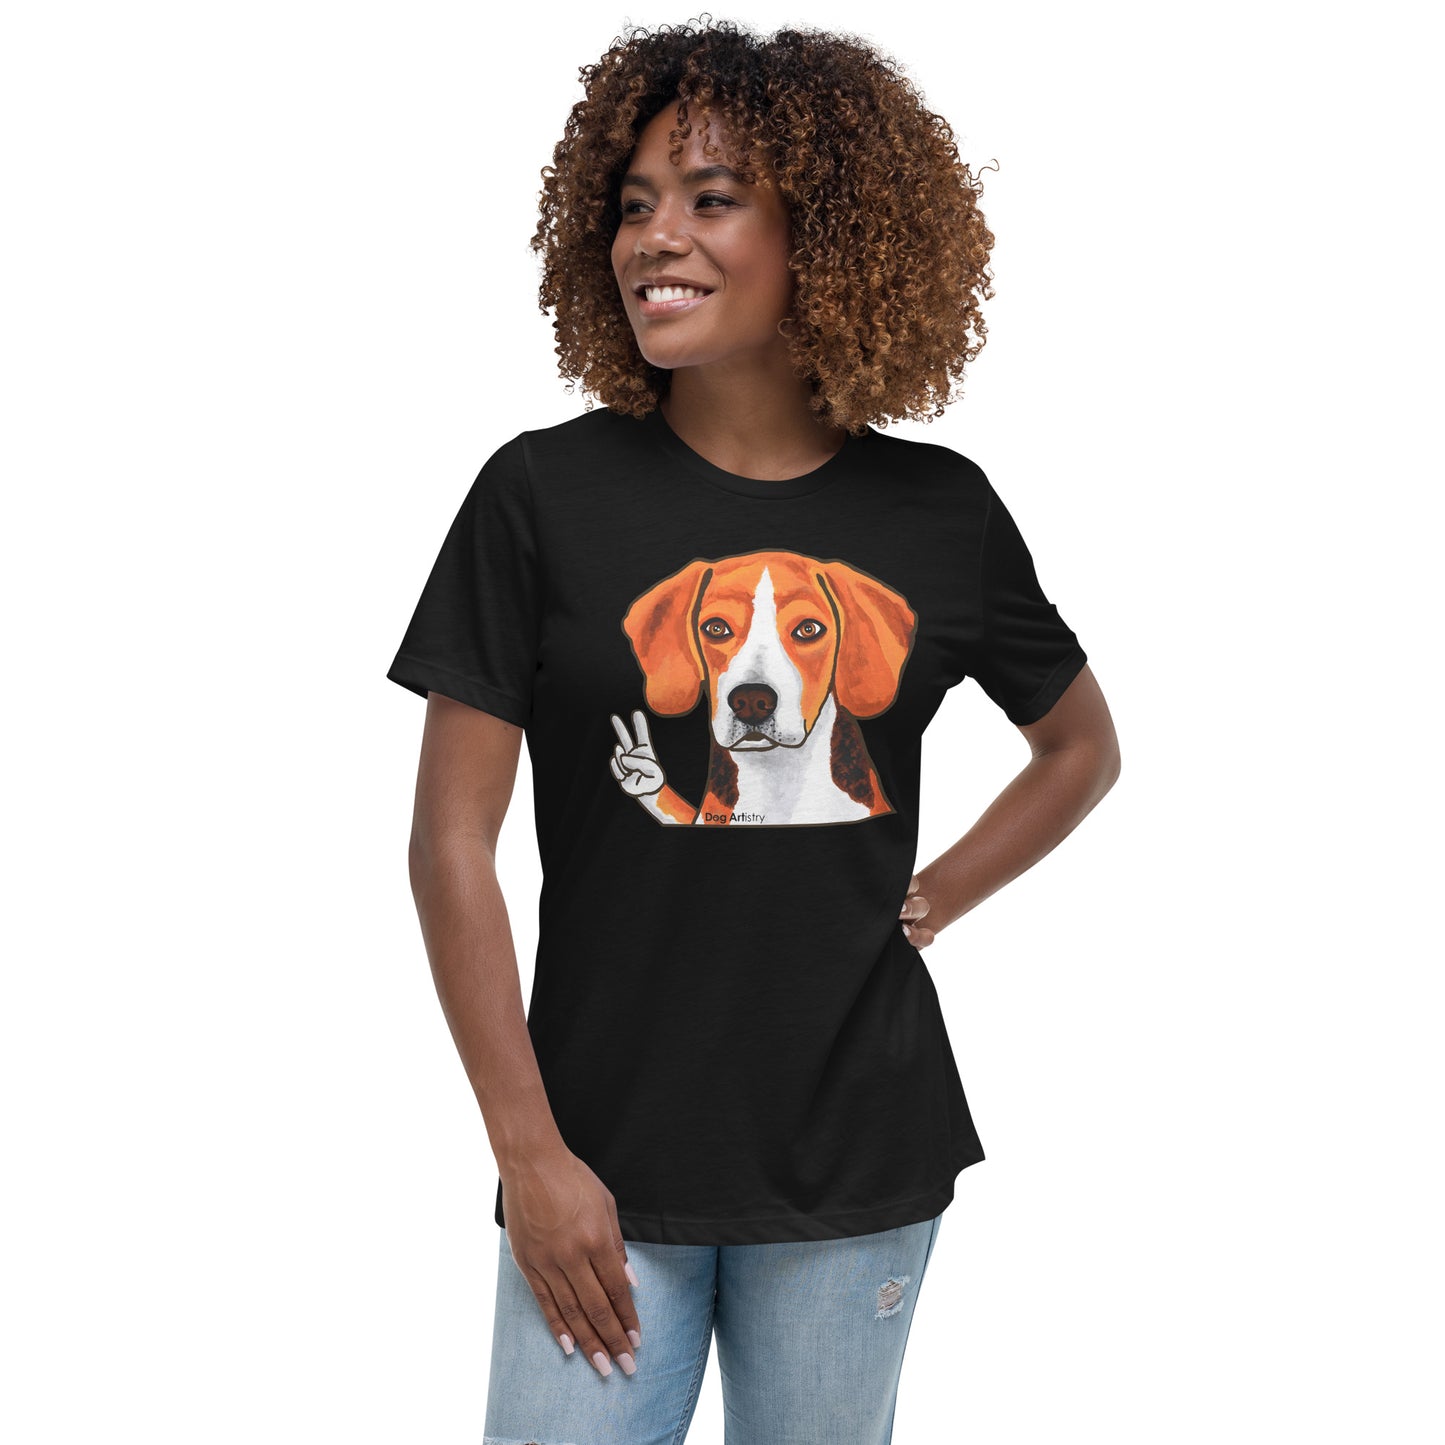 Beagle peace women's t-shirt black by Dog Artistry